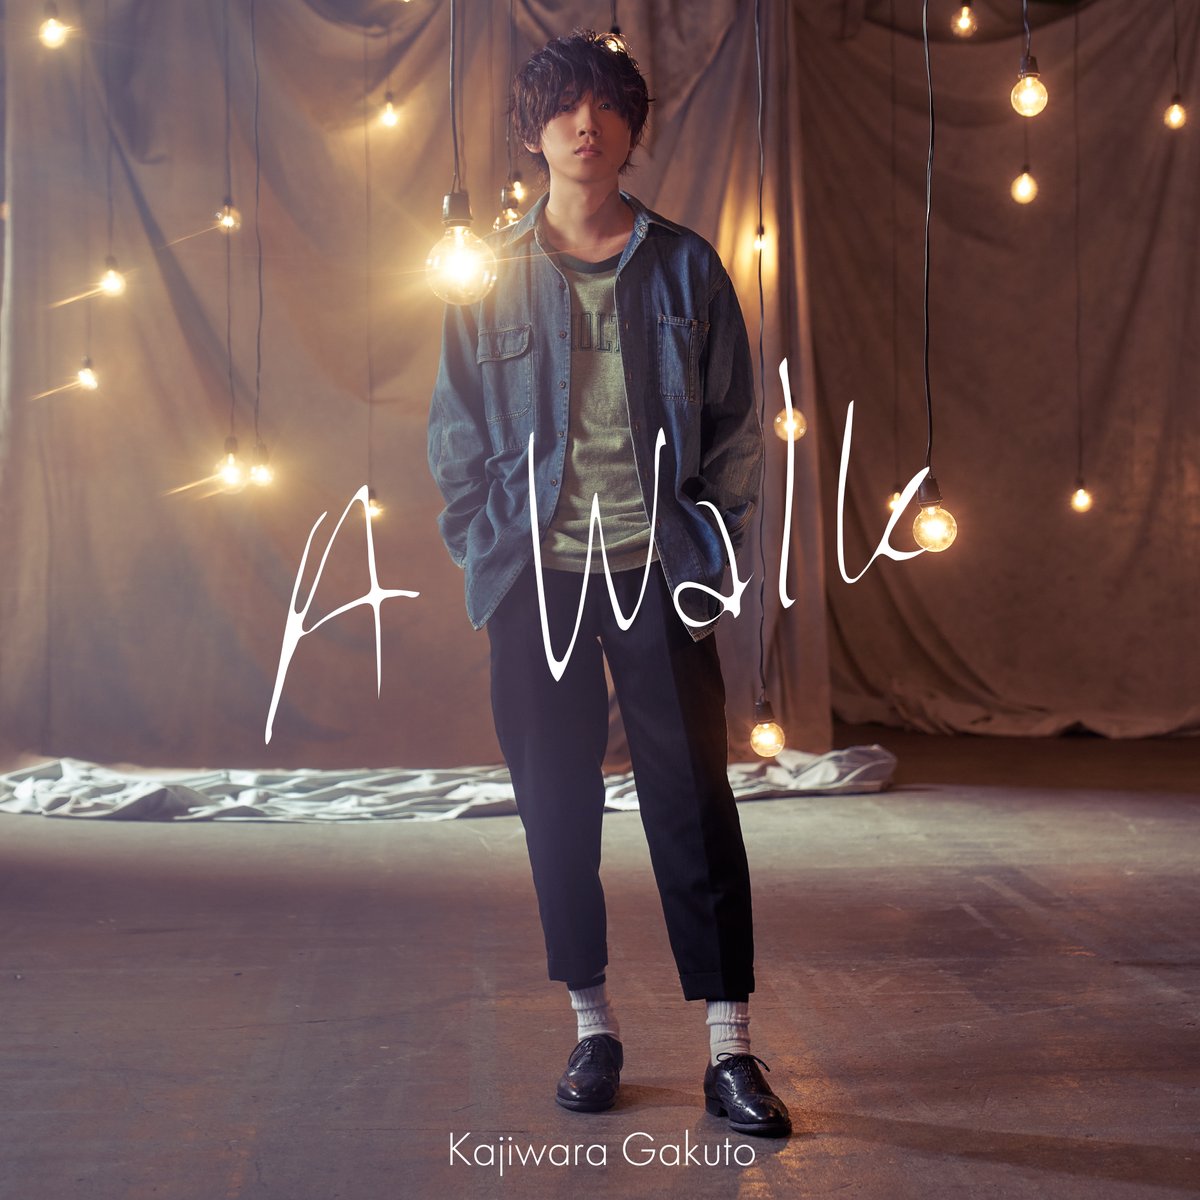 Cover for『Gakuto Kajiwara - A Walk』from the release『A Walk』